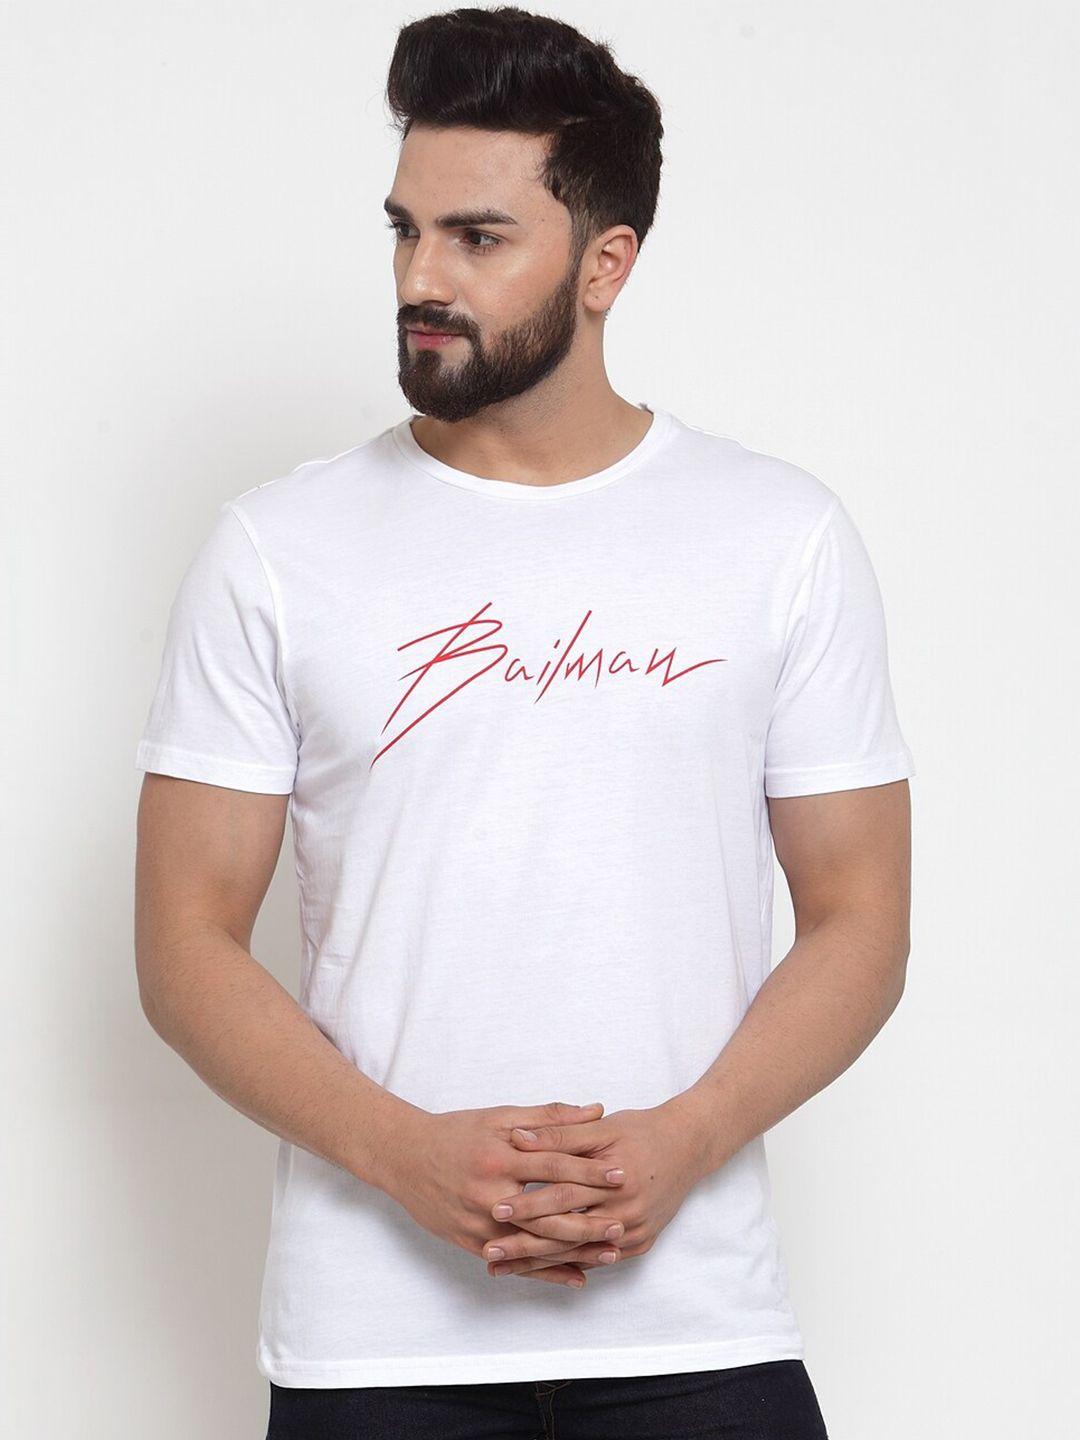 door74 men white & red typography printed cotton t-shirt